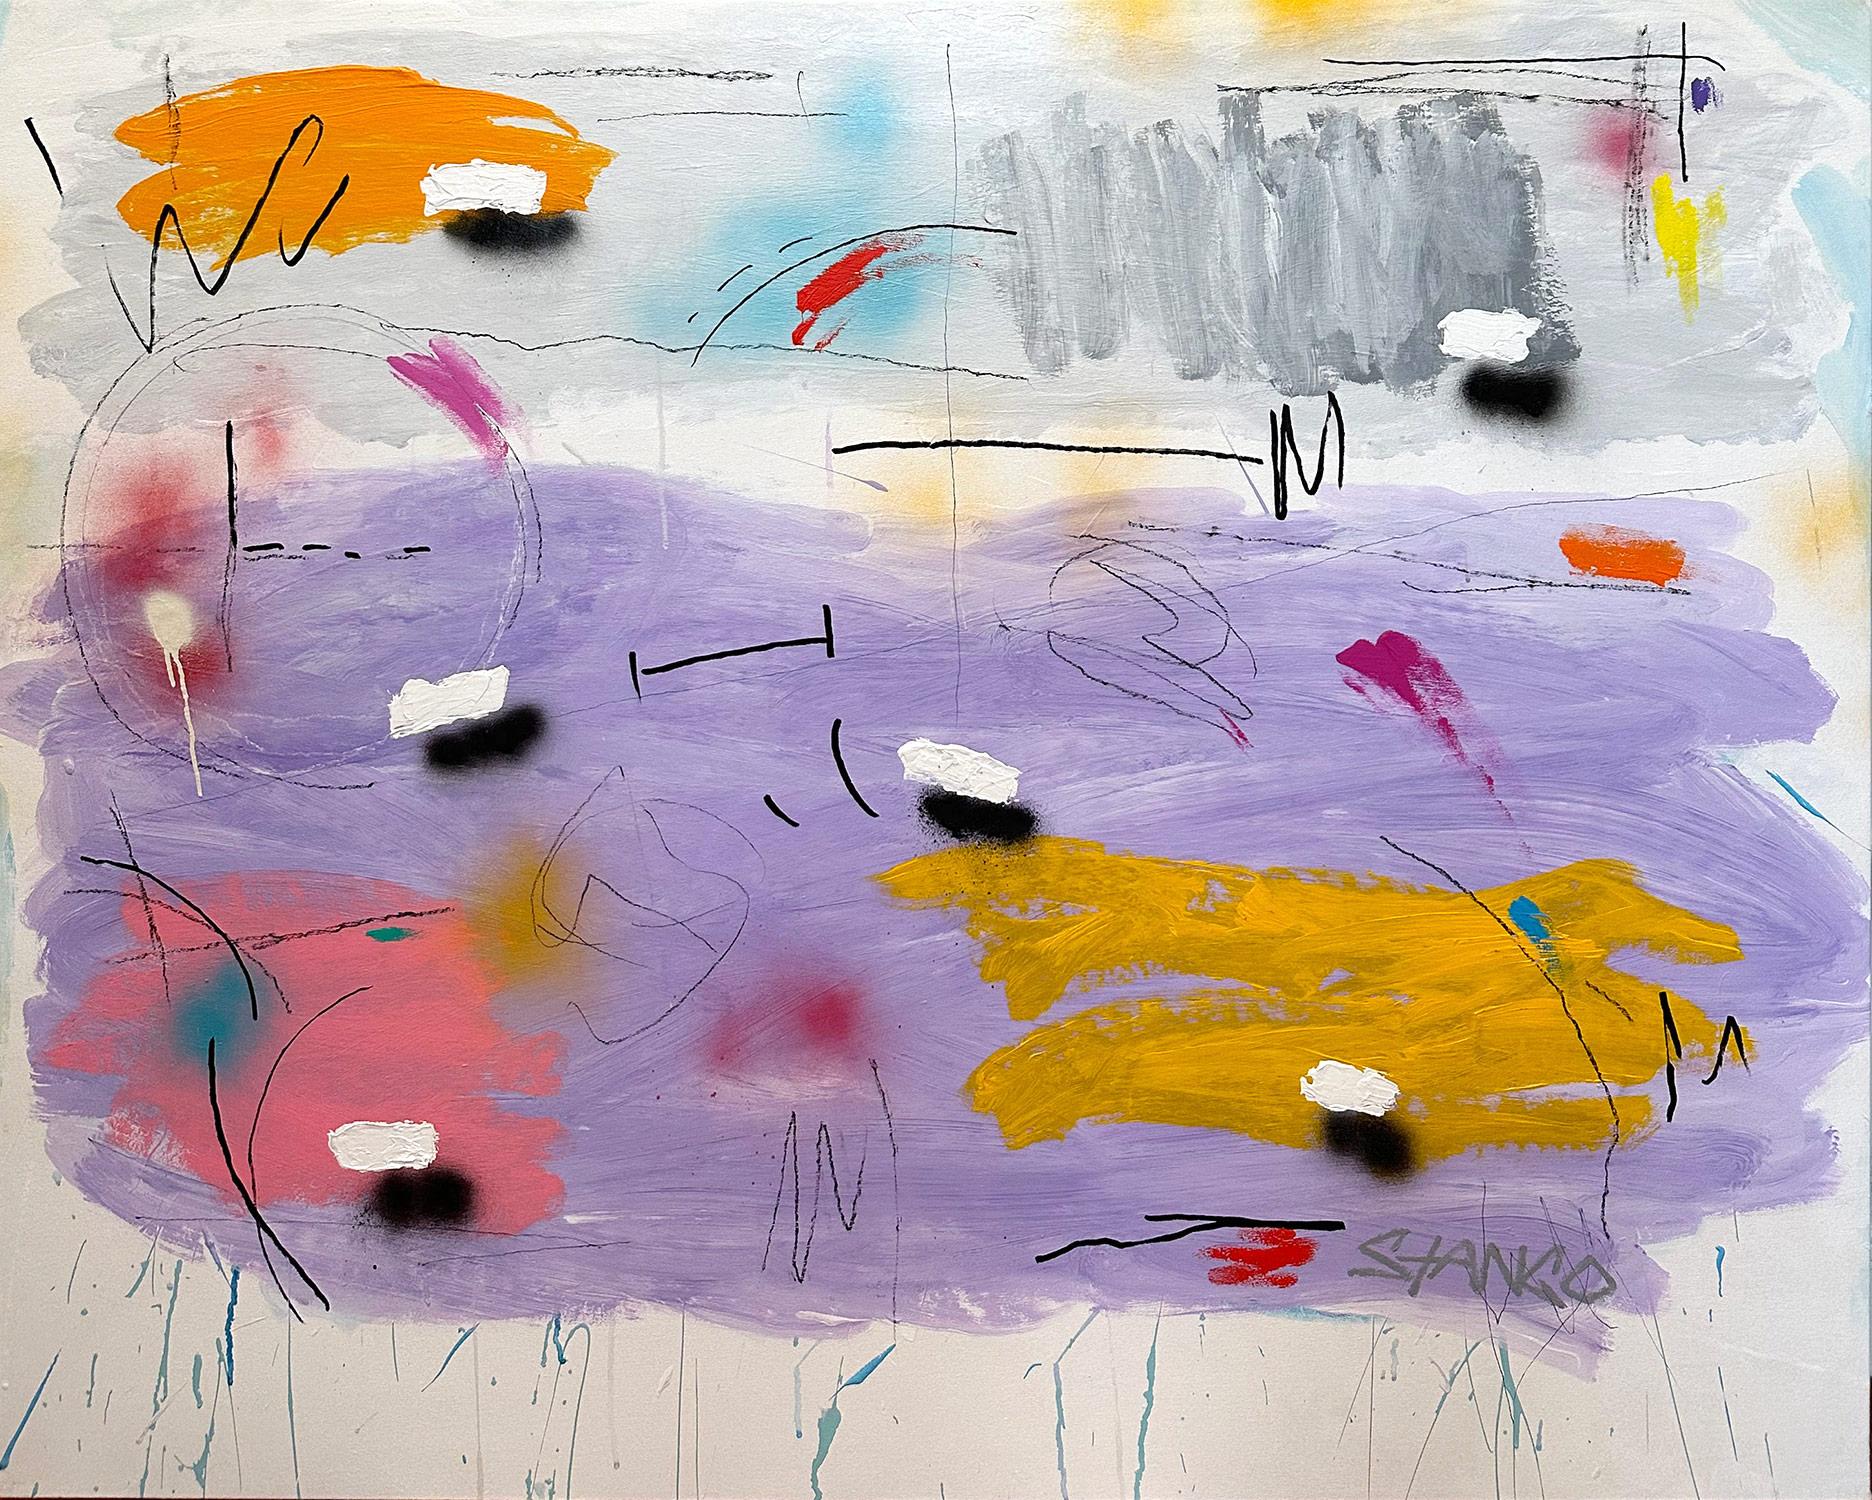 John Stango Abstract Painting – Buntes abstraktes Pop-Art-Acrylgemälde „Ghost Rider“ auf hellem Hintergrund, farbenfrohes Acryl